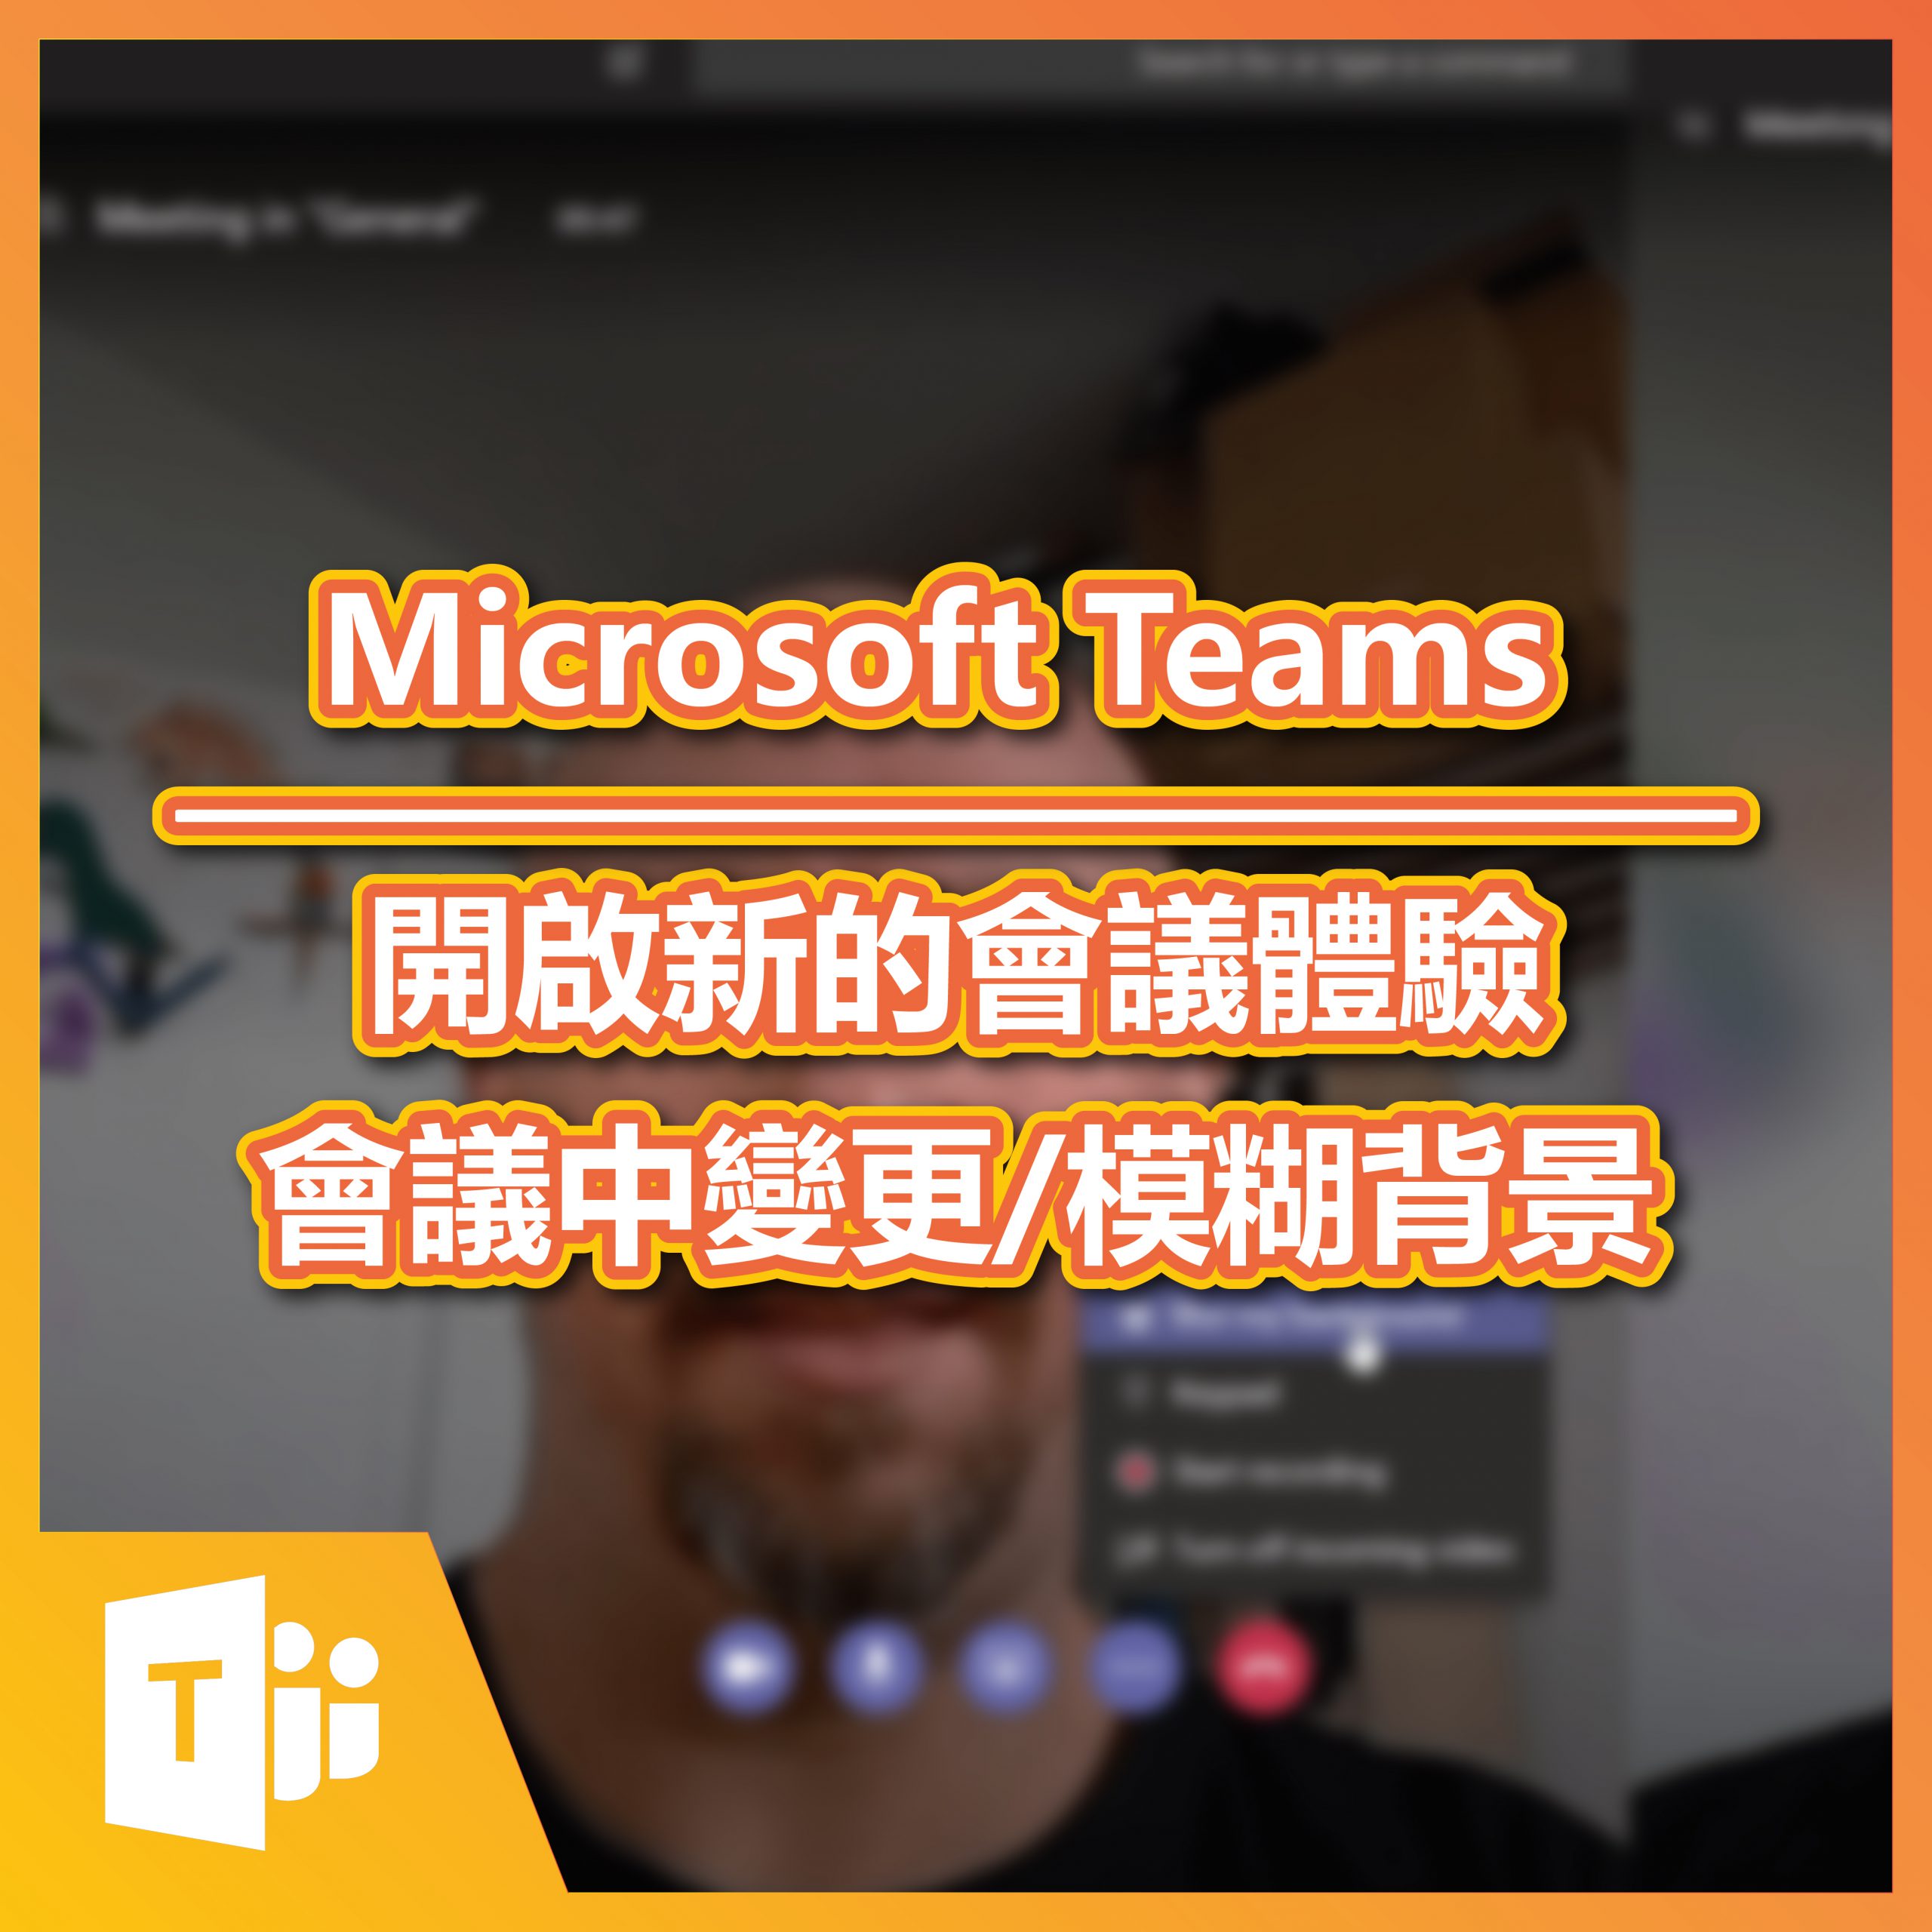 Microsoft Teams 模糊背景